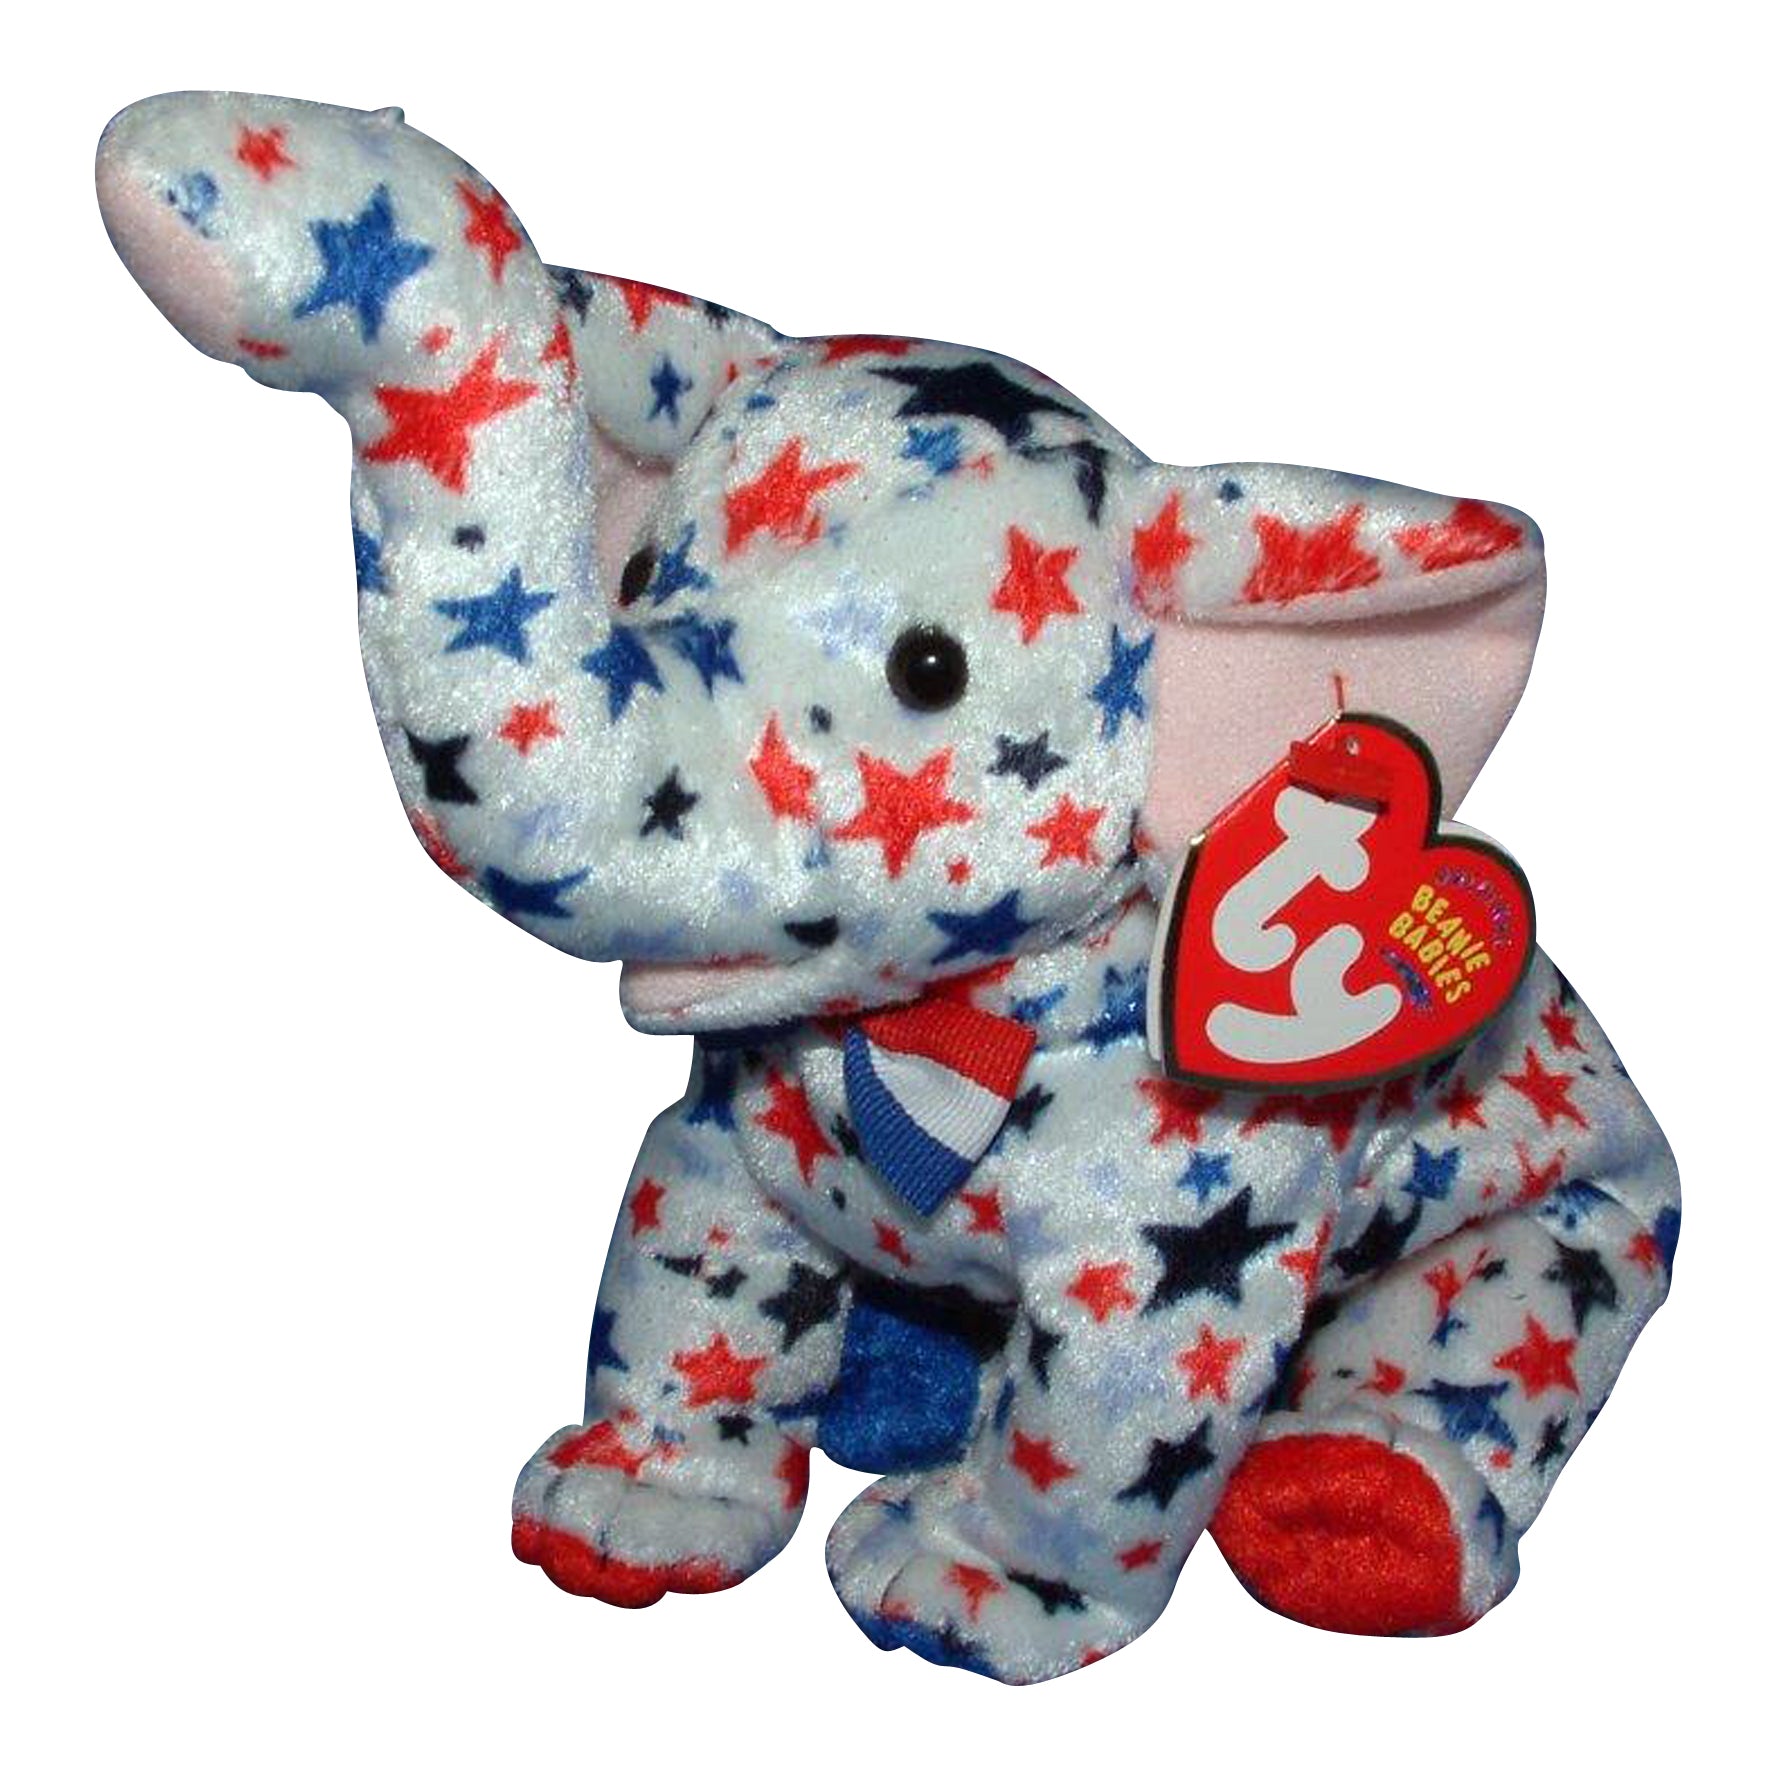 Ty Beanie Baby: Righty 2004 the Elephant